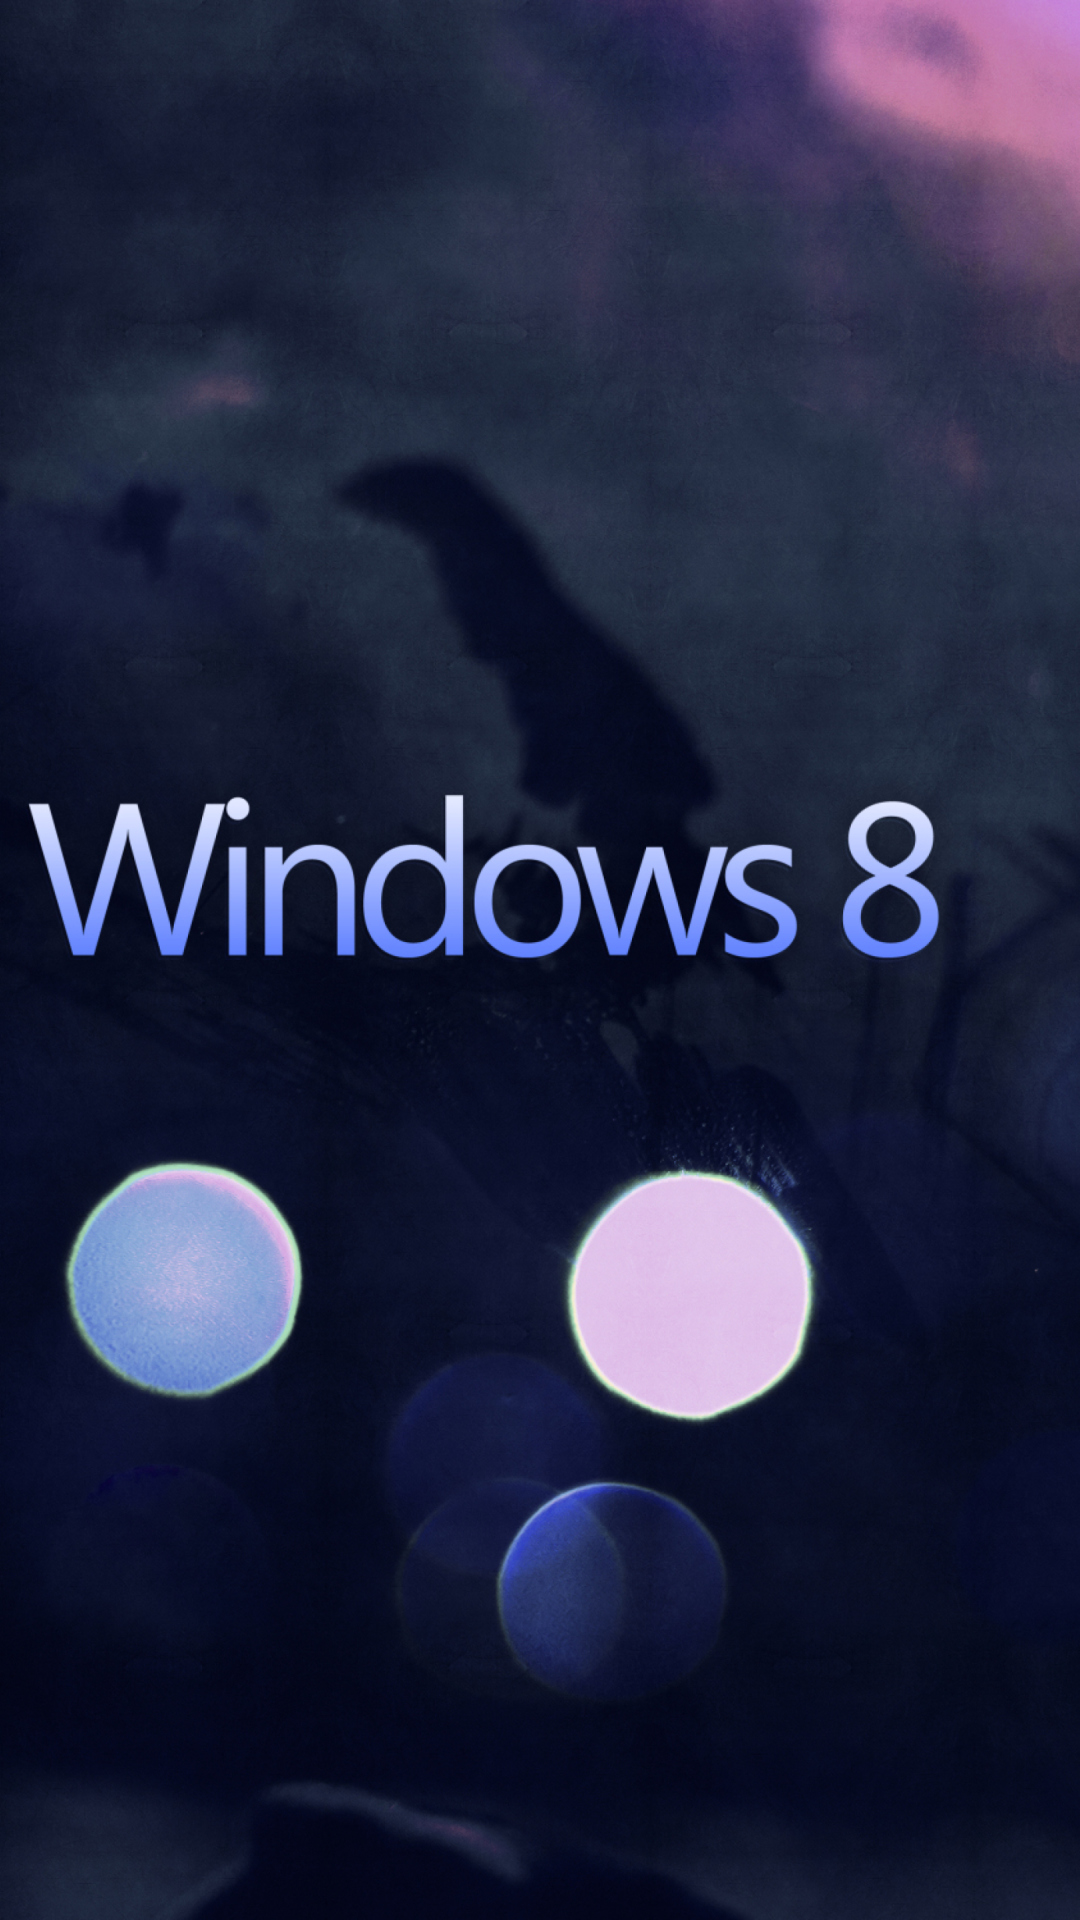 Das Windows 8 - Hi-Tech Wallpaper 1080x1920